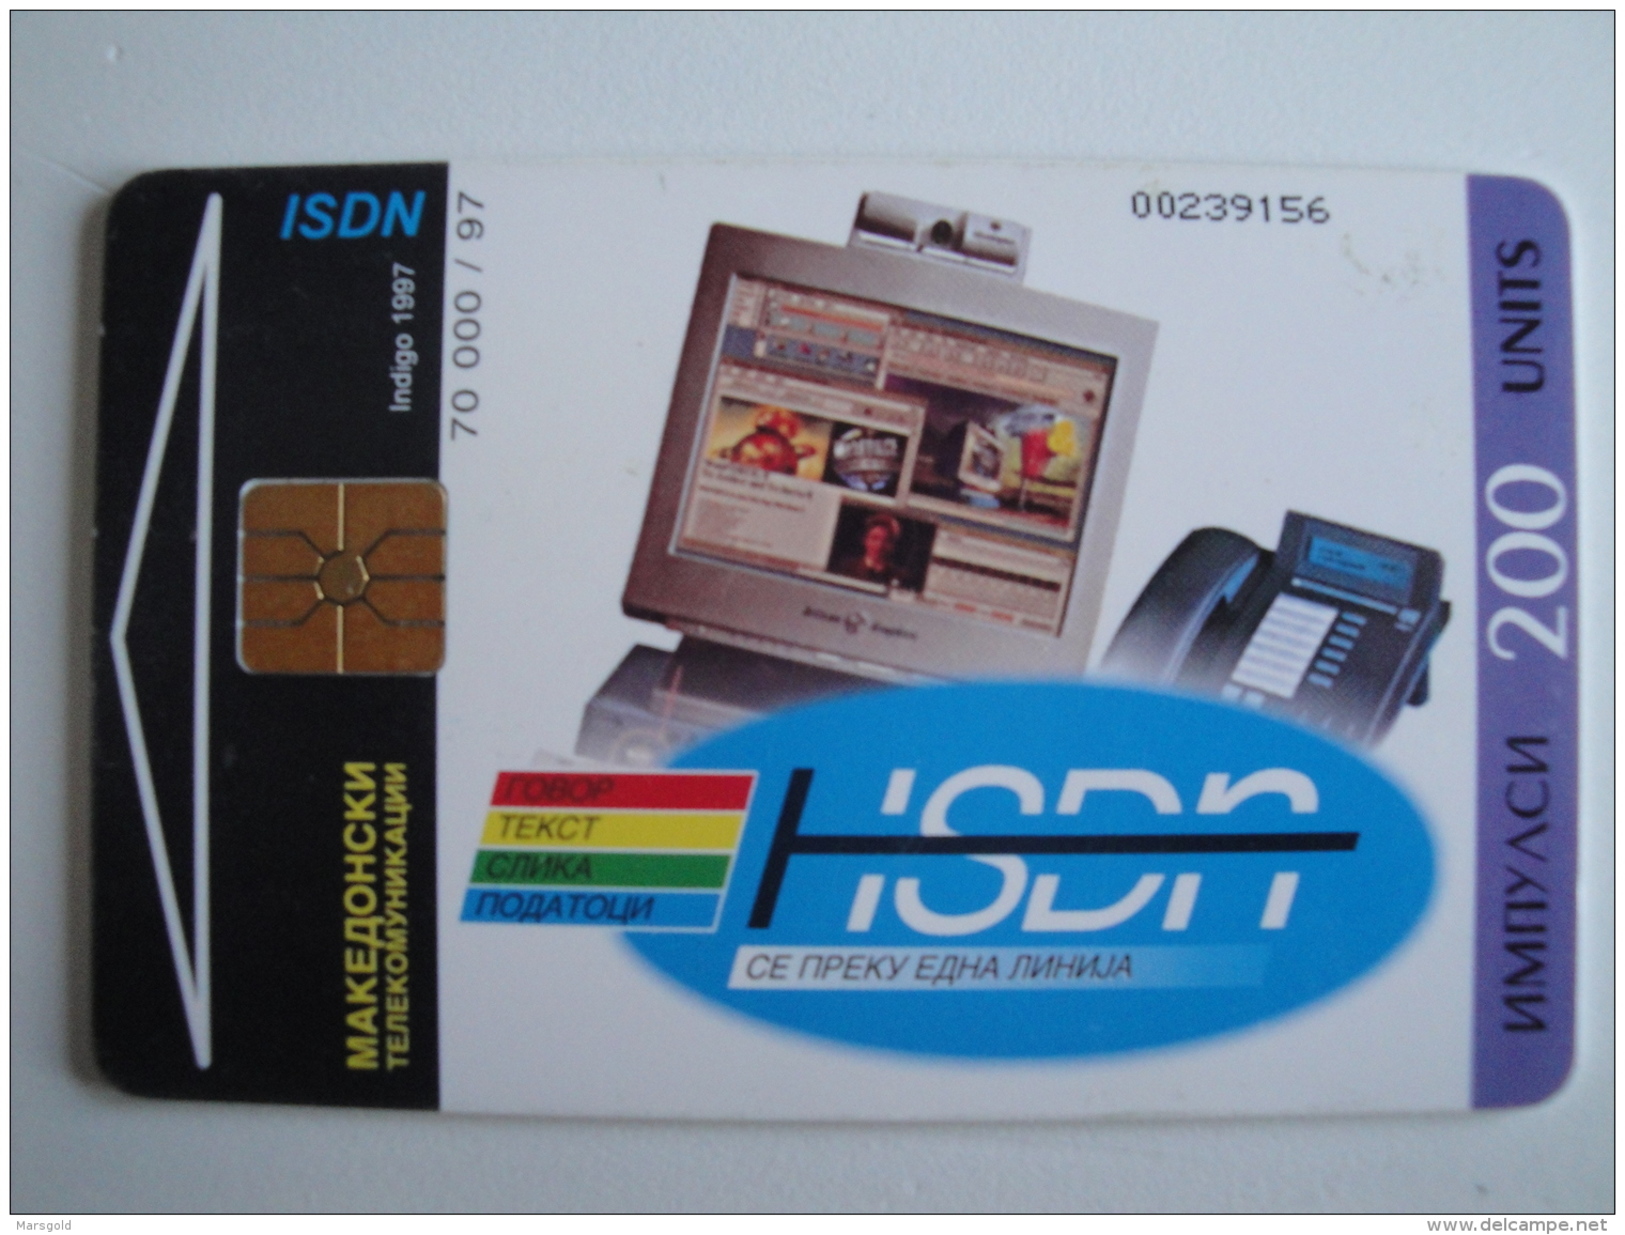 1 Chip Phonecard From Macedonia - ISDN / Instructions - North Macedonia